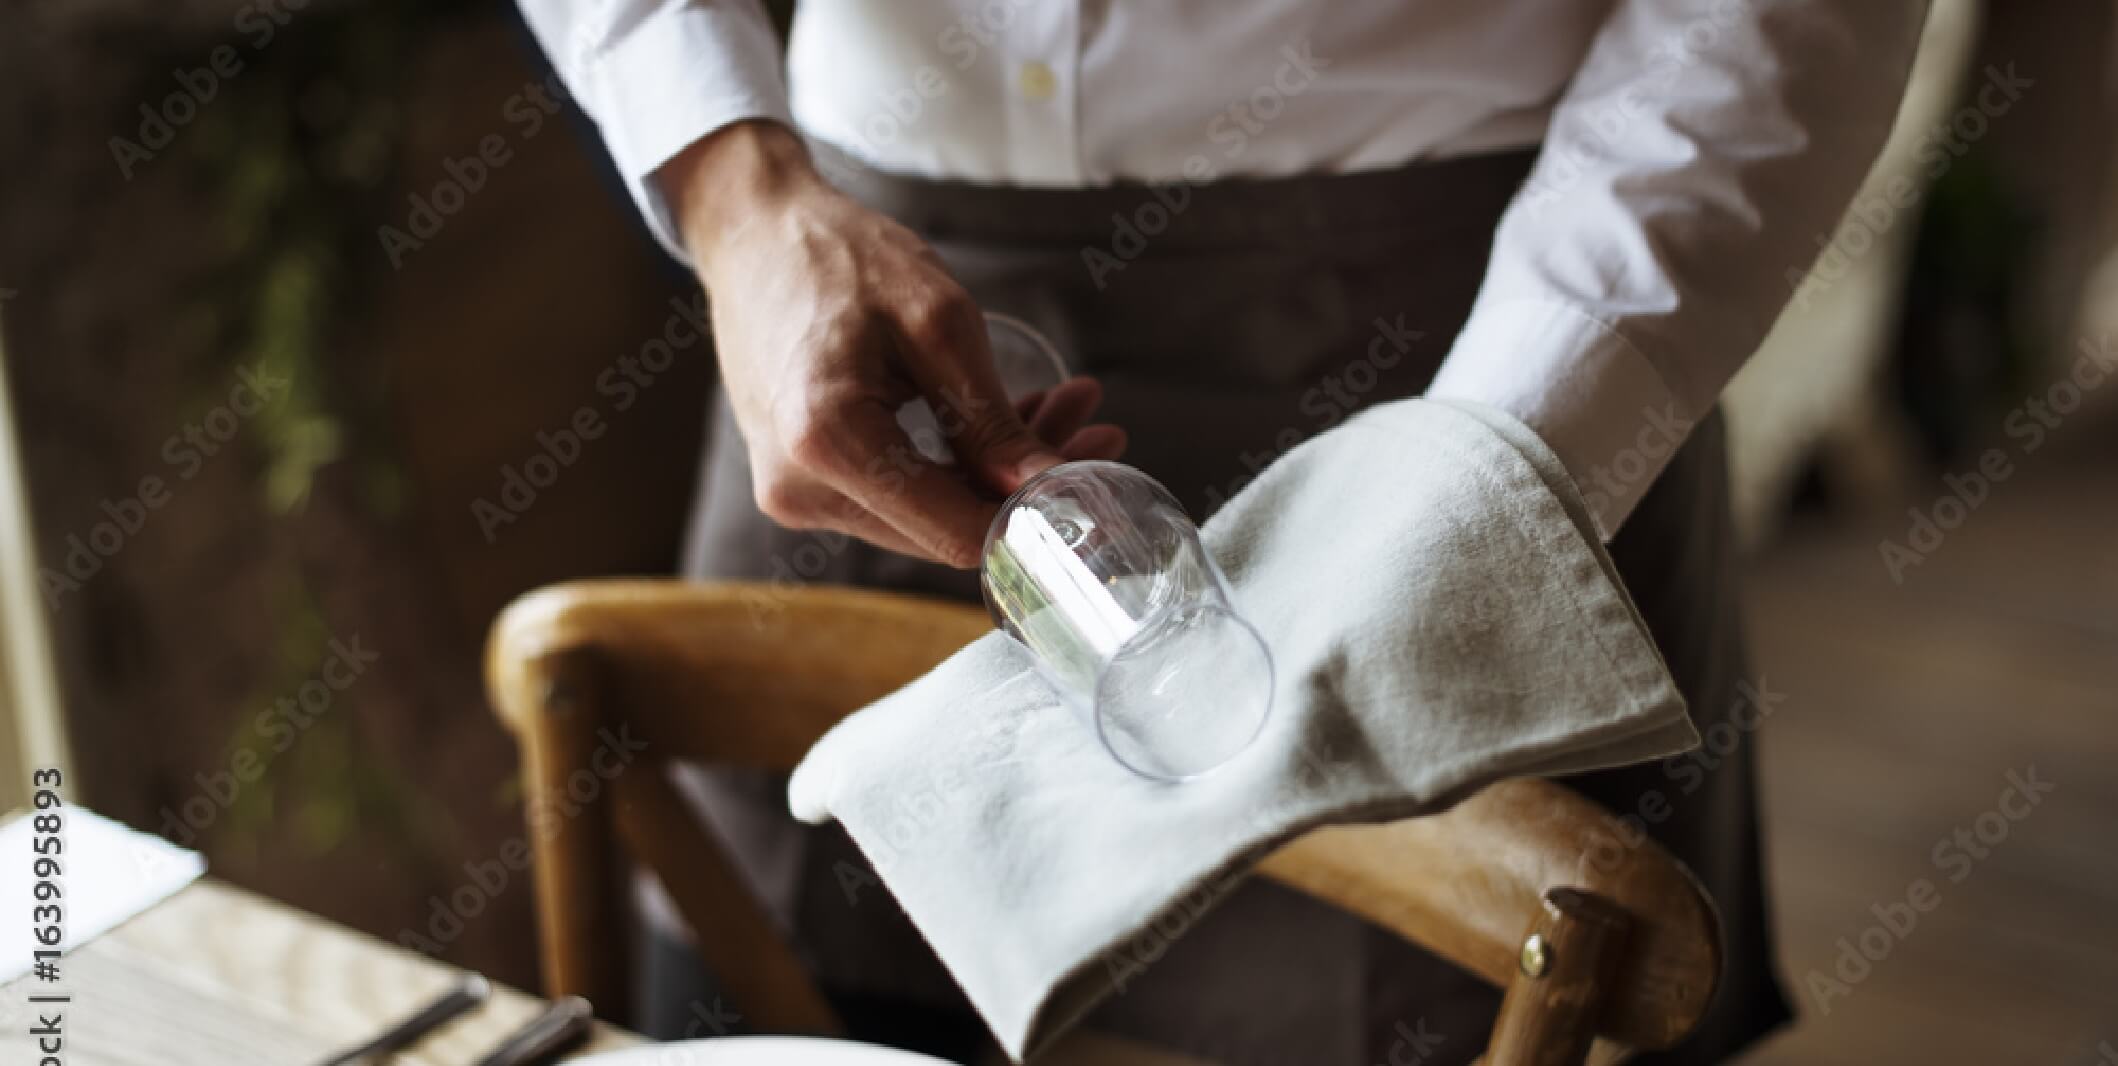 server holding wine glass and linen napkin